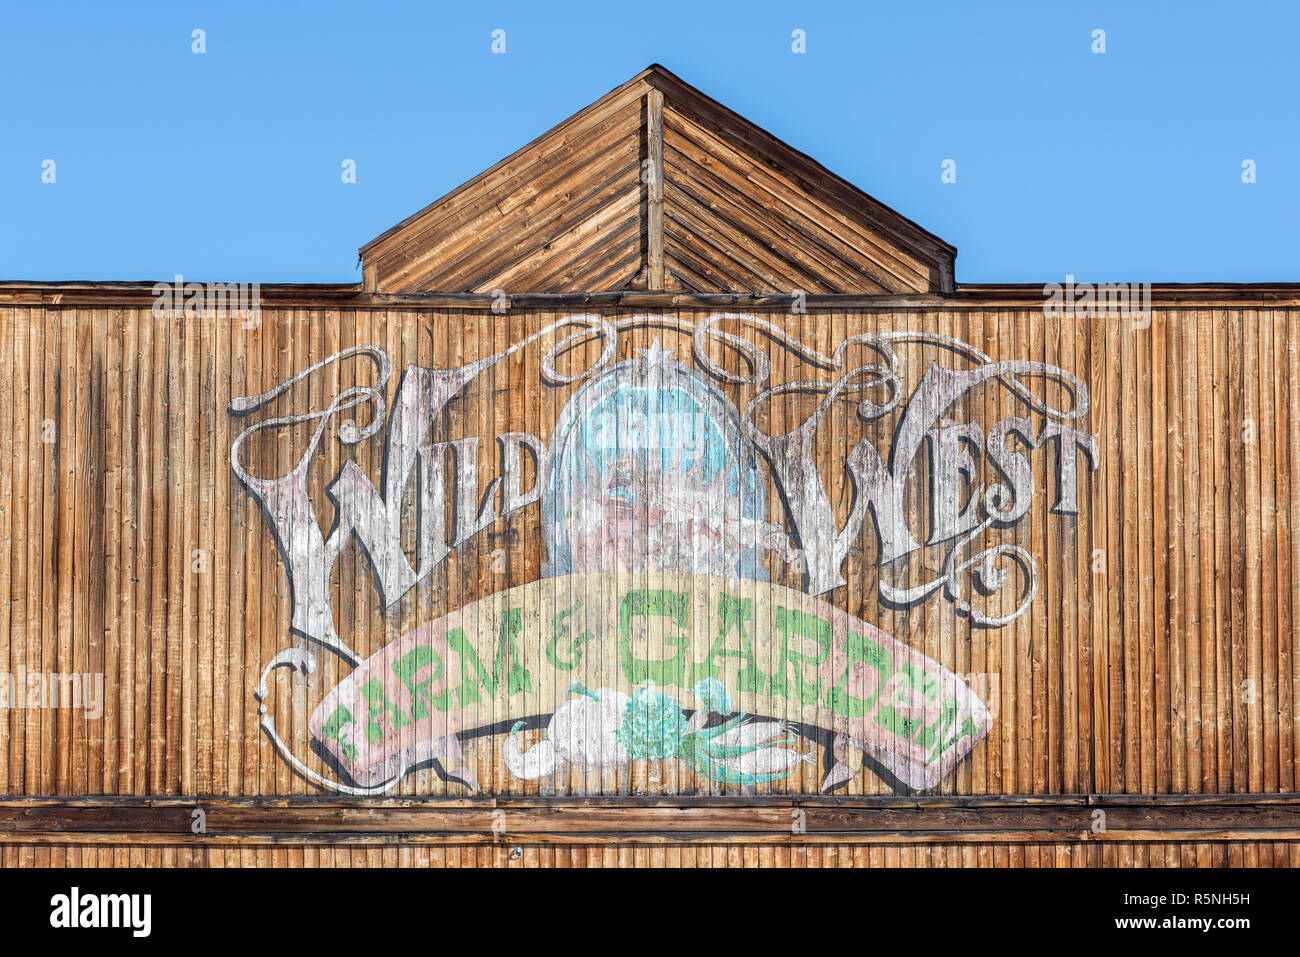 Sign on the facade of the Wild West Farm & Garden store in Republic, Washington. Stock Photo